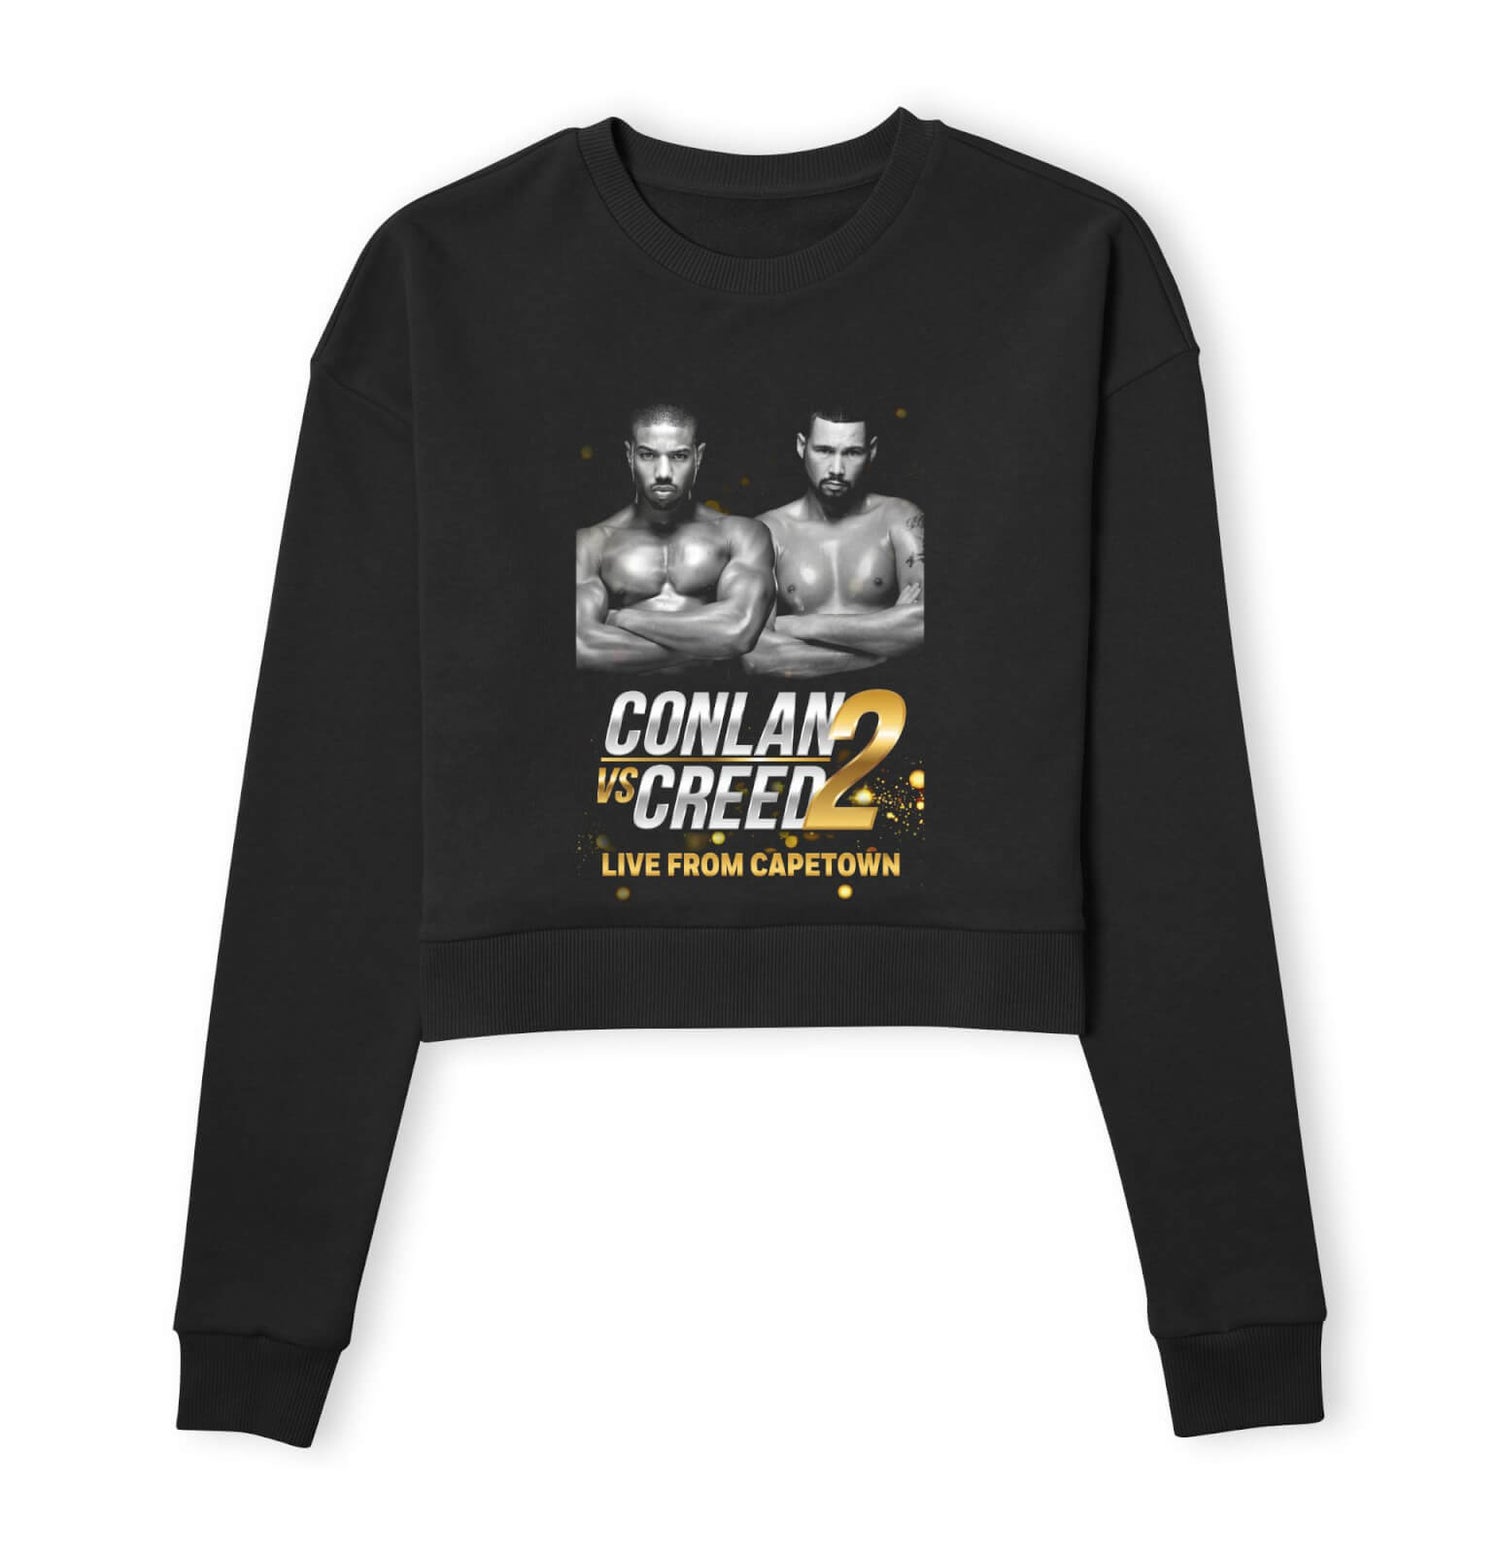 Creed Conlan Vs Creed 2 Poster Women's Cropped Sweatshirt - Black - XS